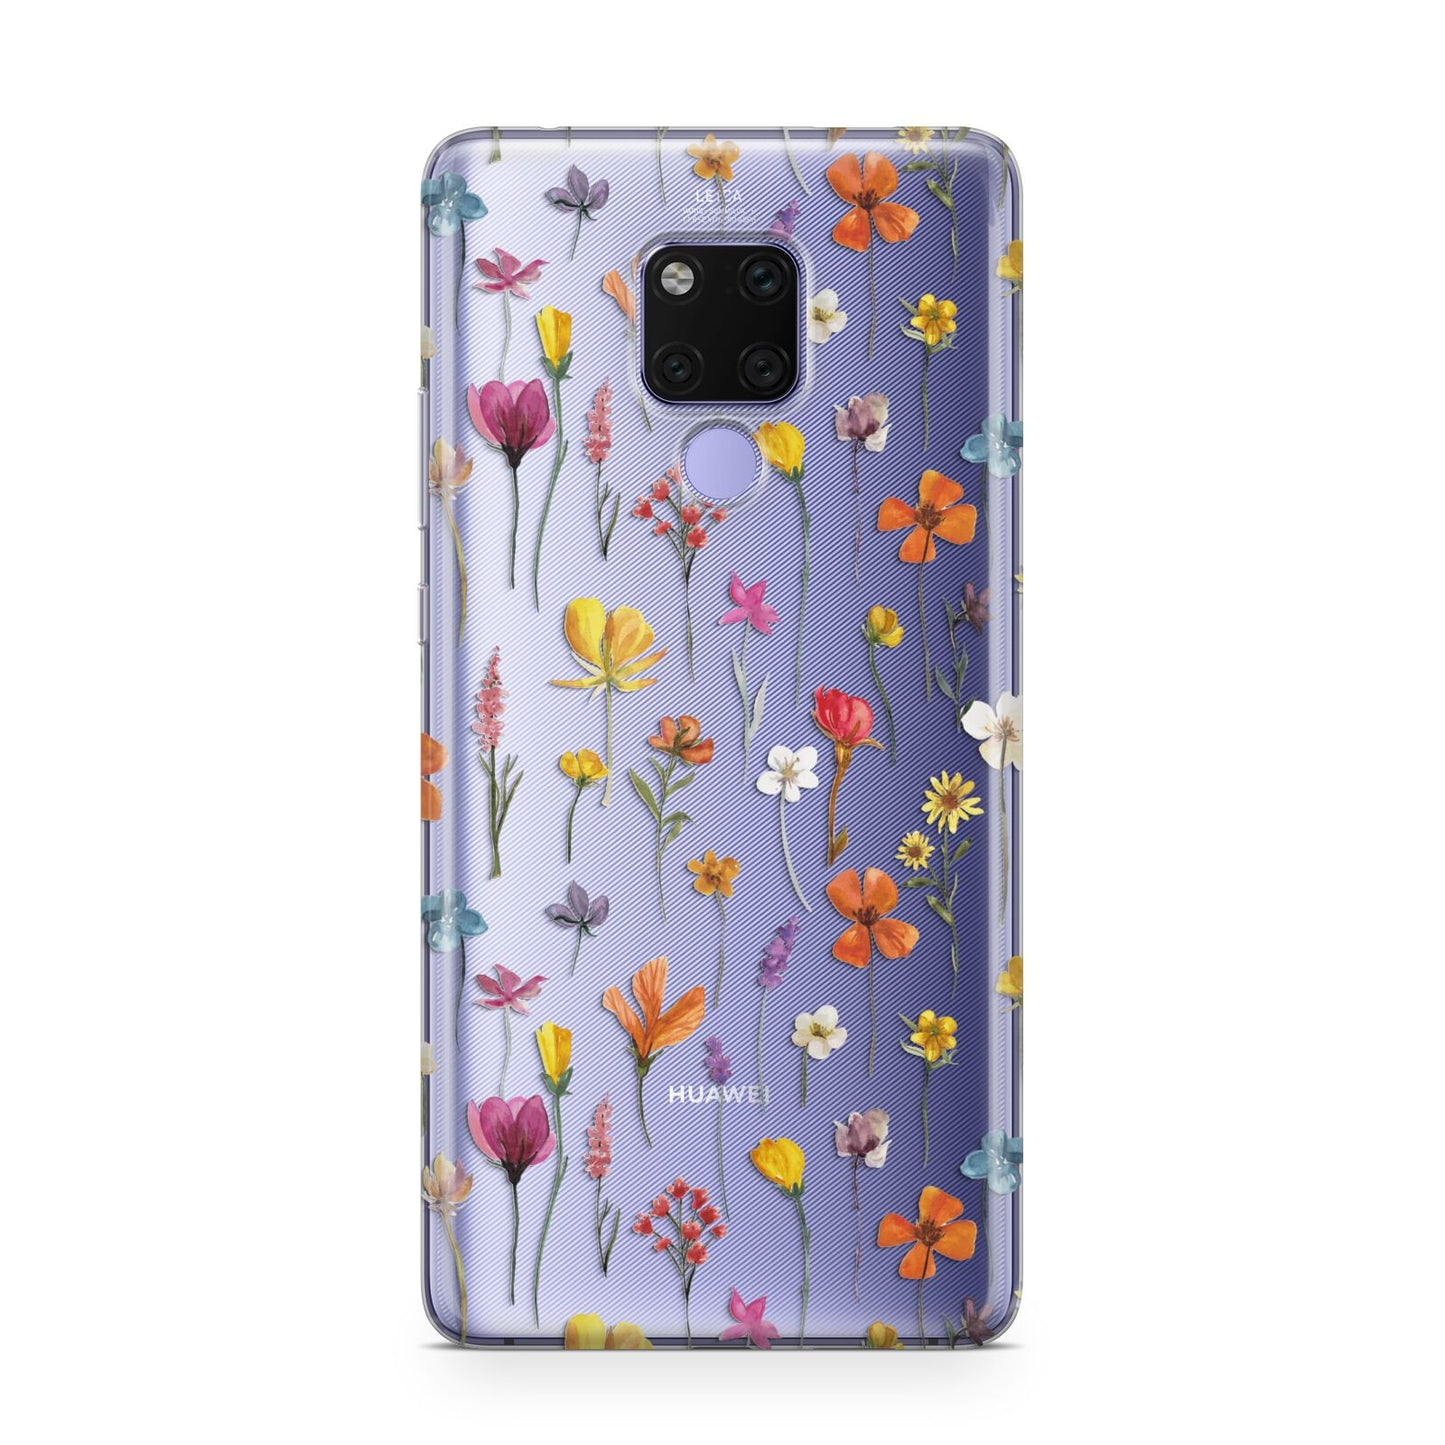 Botanical Floral Huawei Mate 20X Phone Case